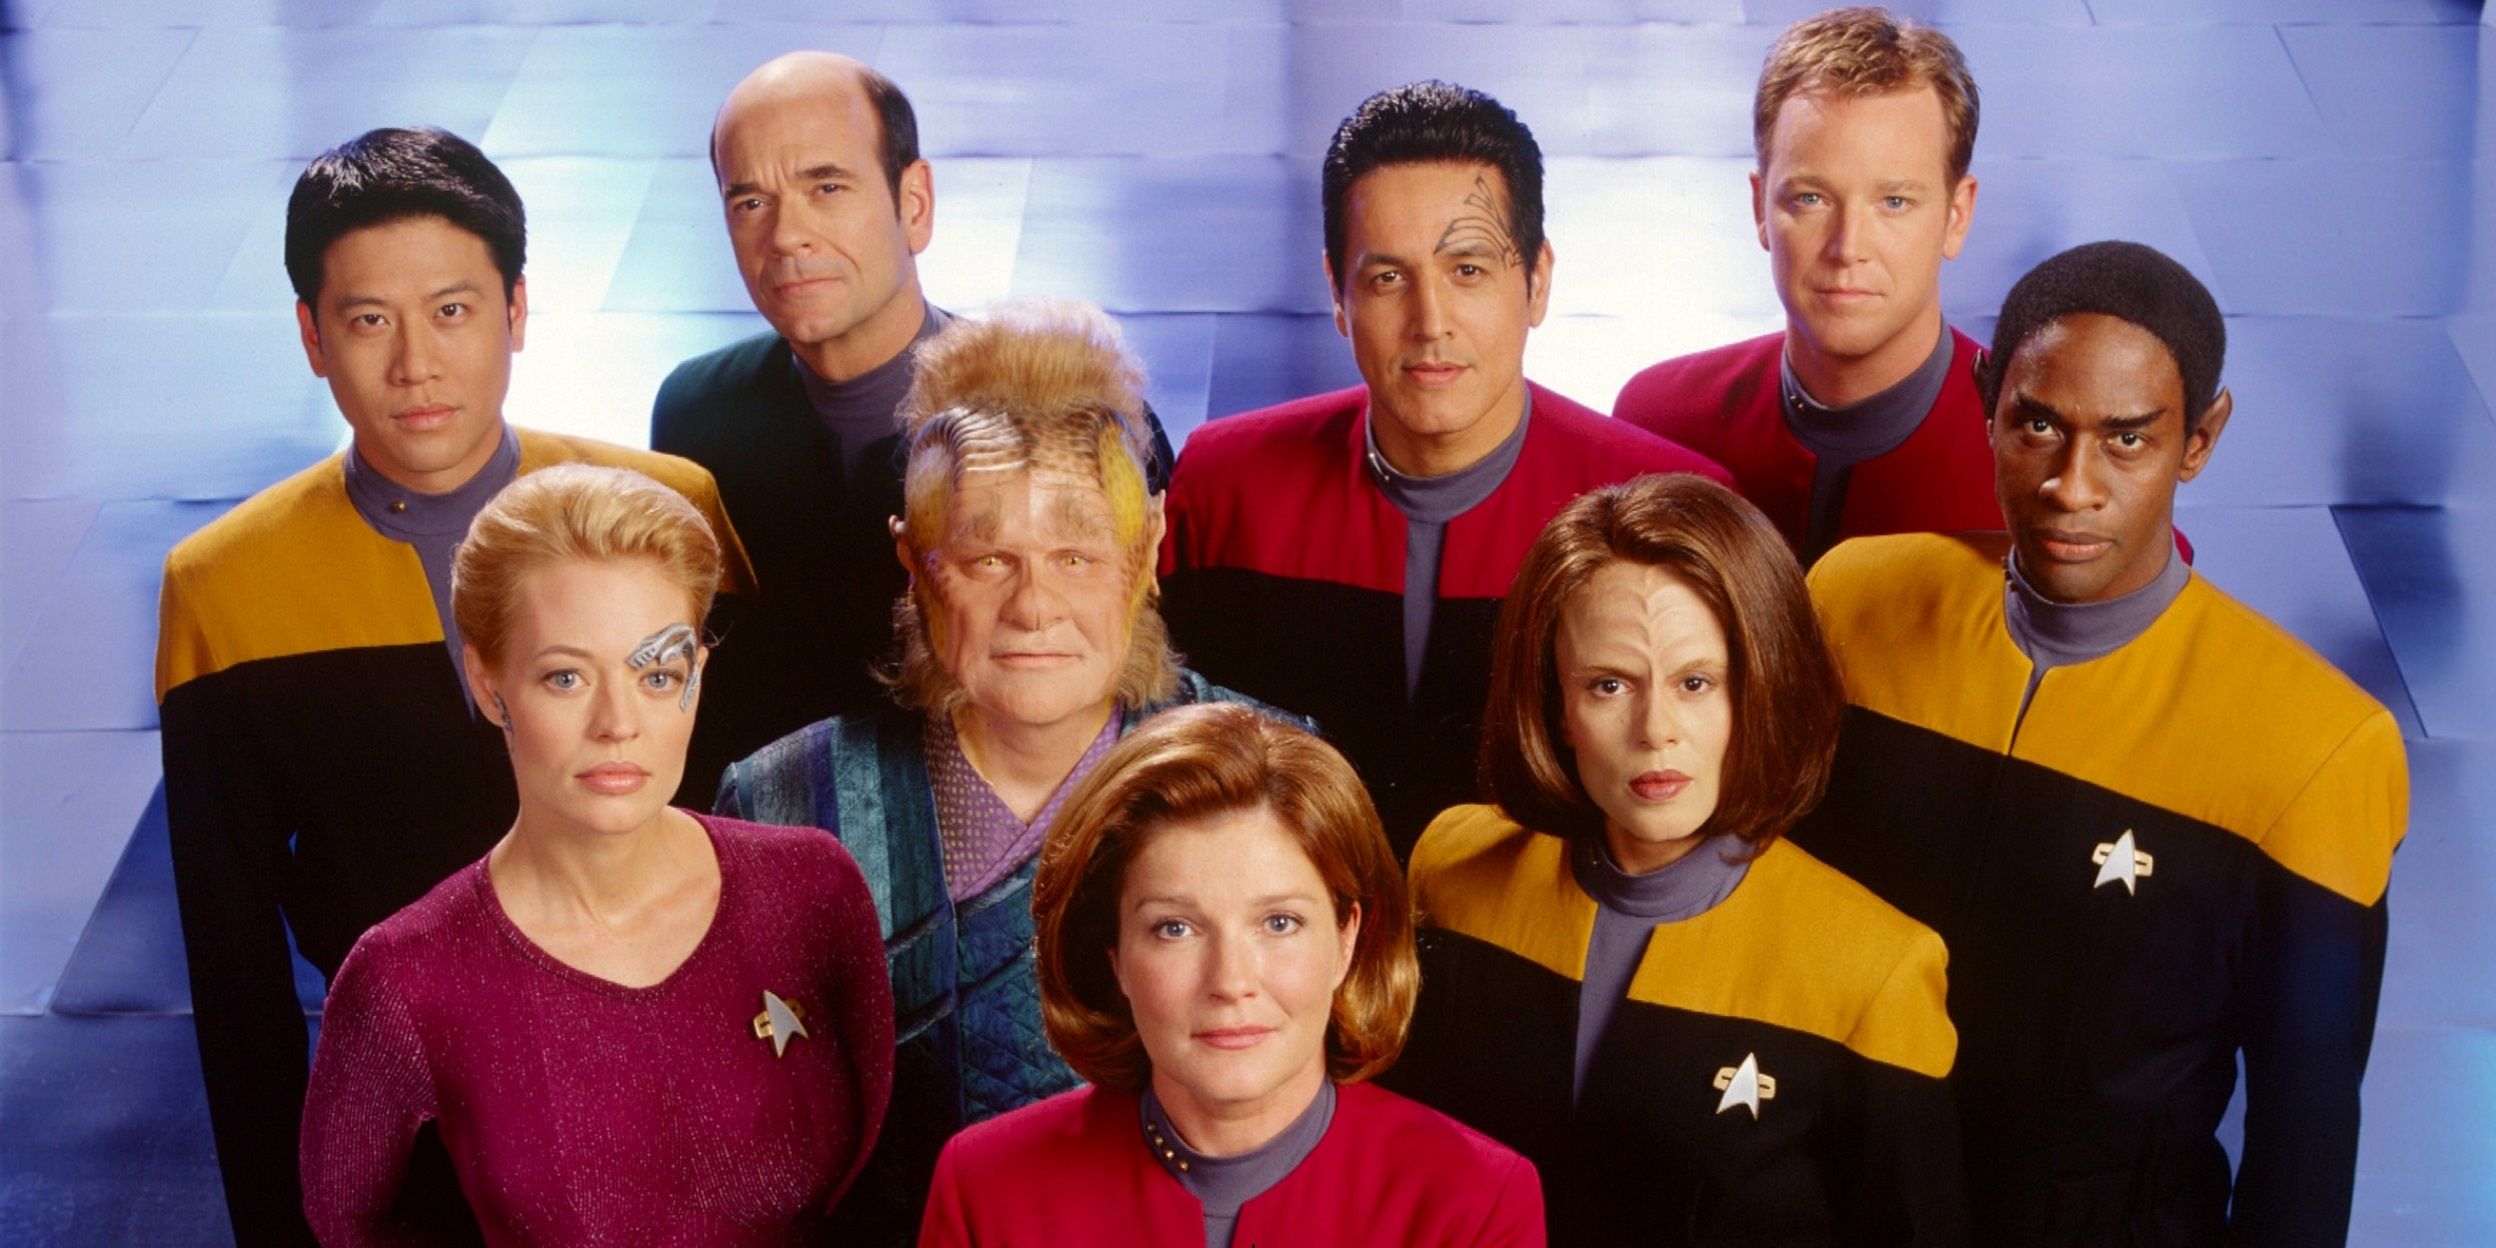 Star-Trek-Voyager